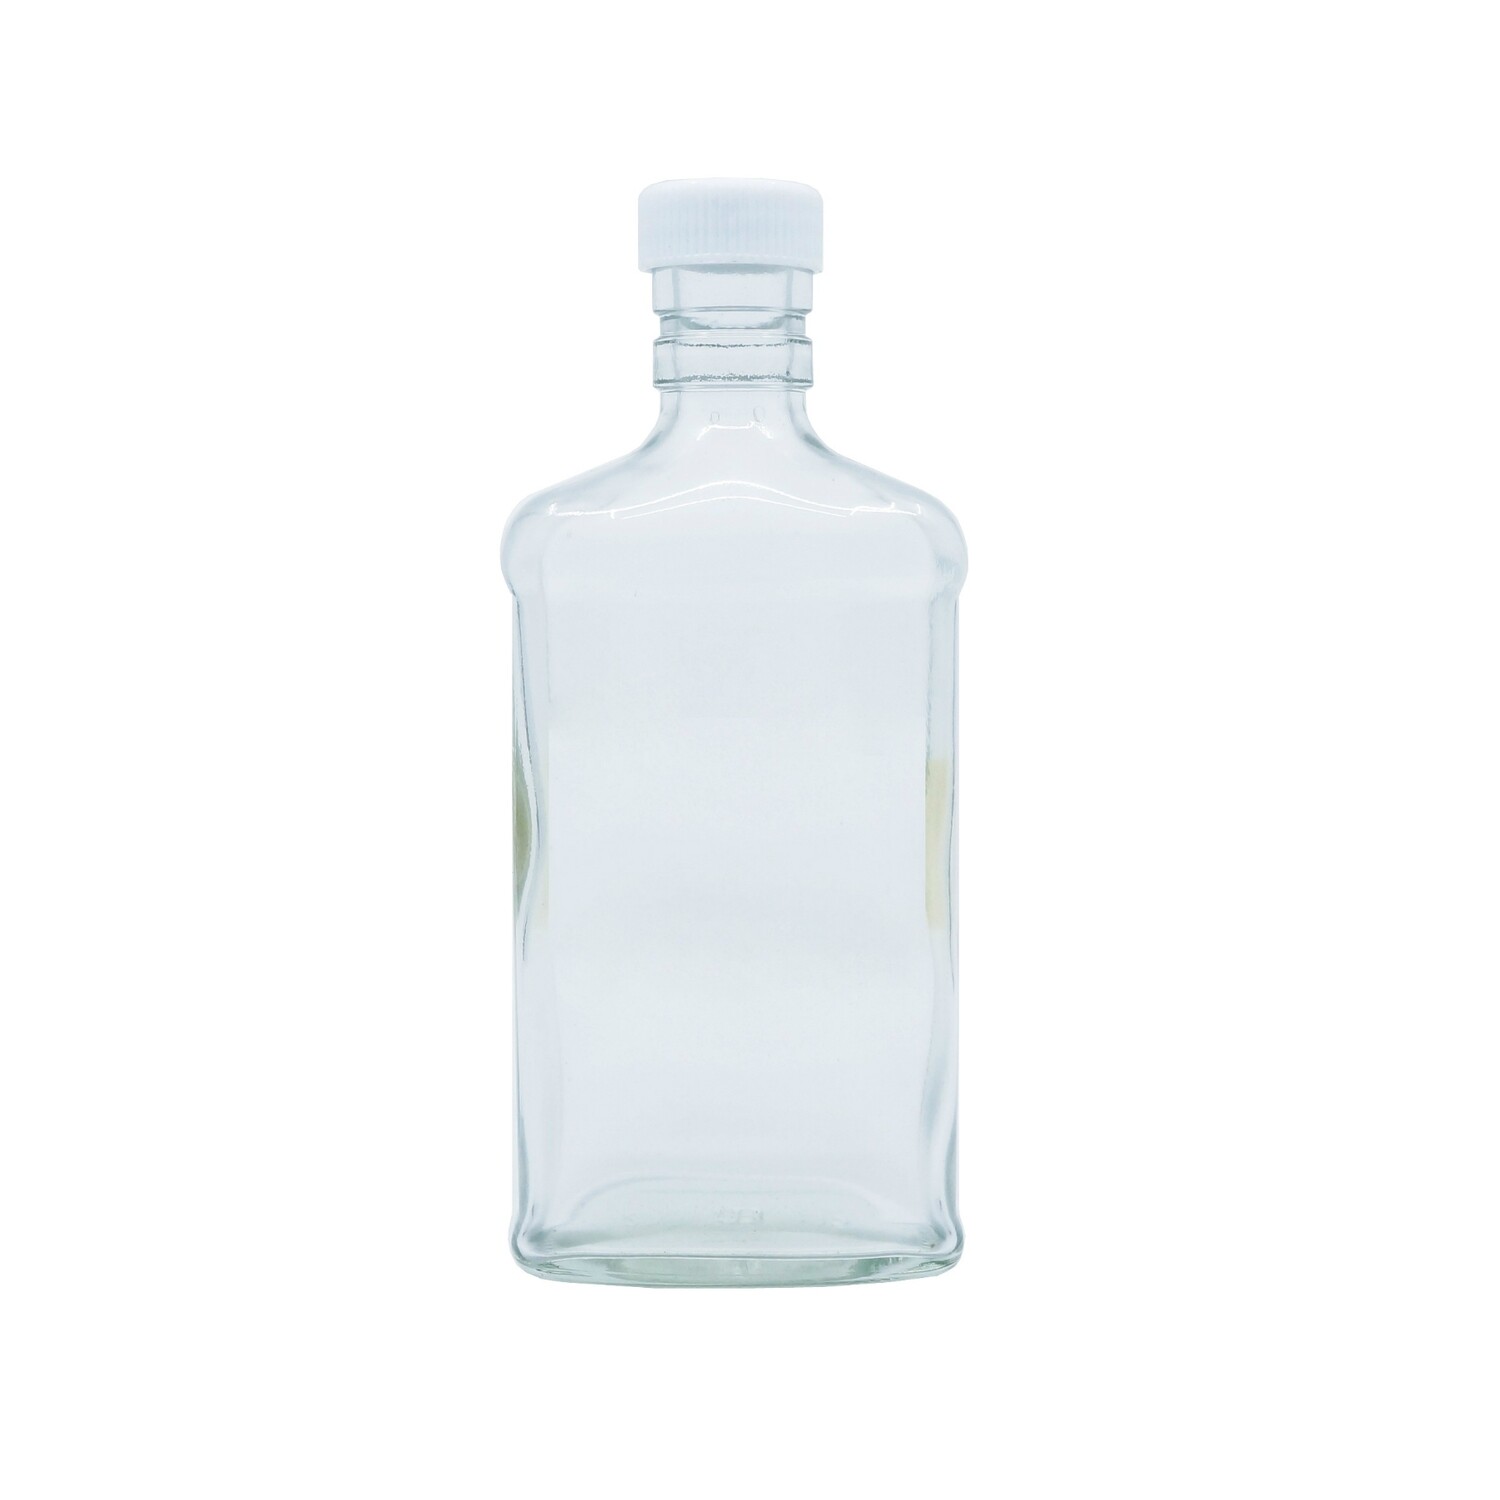 350ml, Rectangular Liquor Glass Bottle w/ Plastic Screw Cap